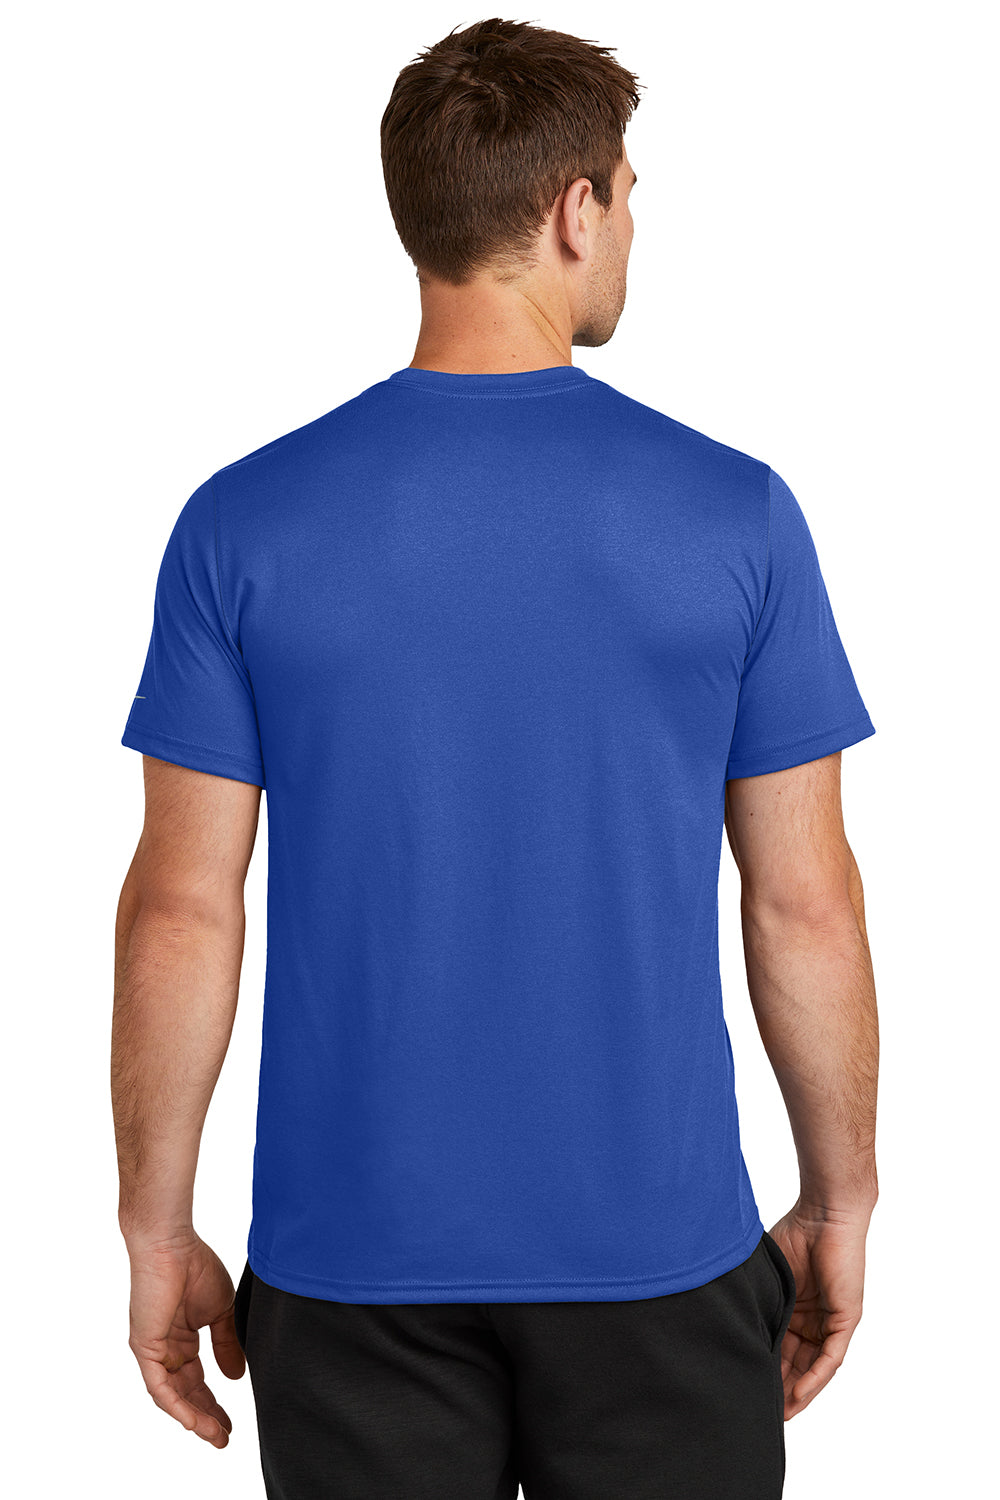 Nike NKDX8730 Mens rLegend Dri-Fit Moisture Wicking Short Sleeve Crewneck T-Shirt Game Royal Blue Model Back